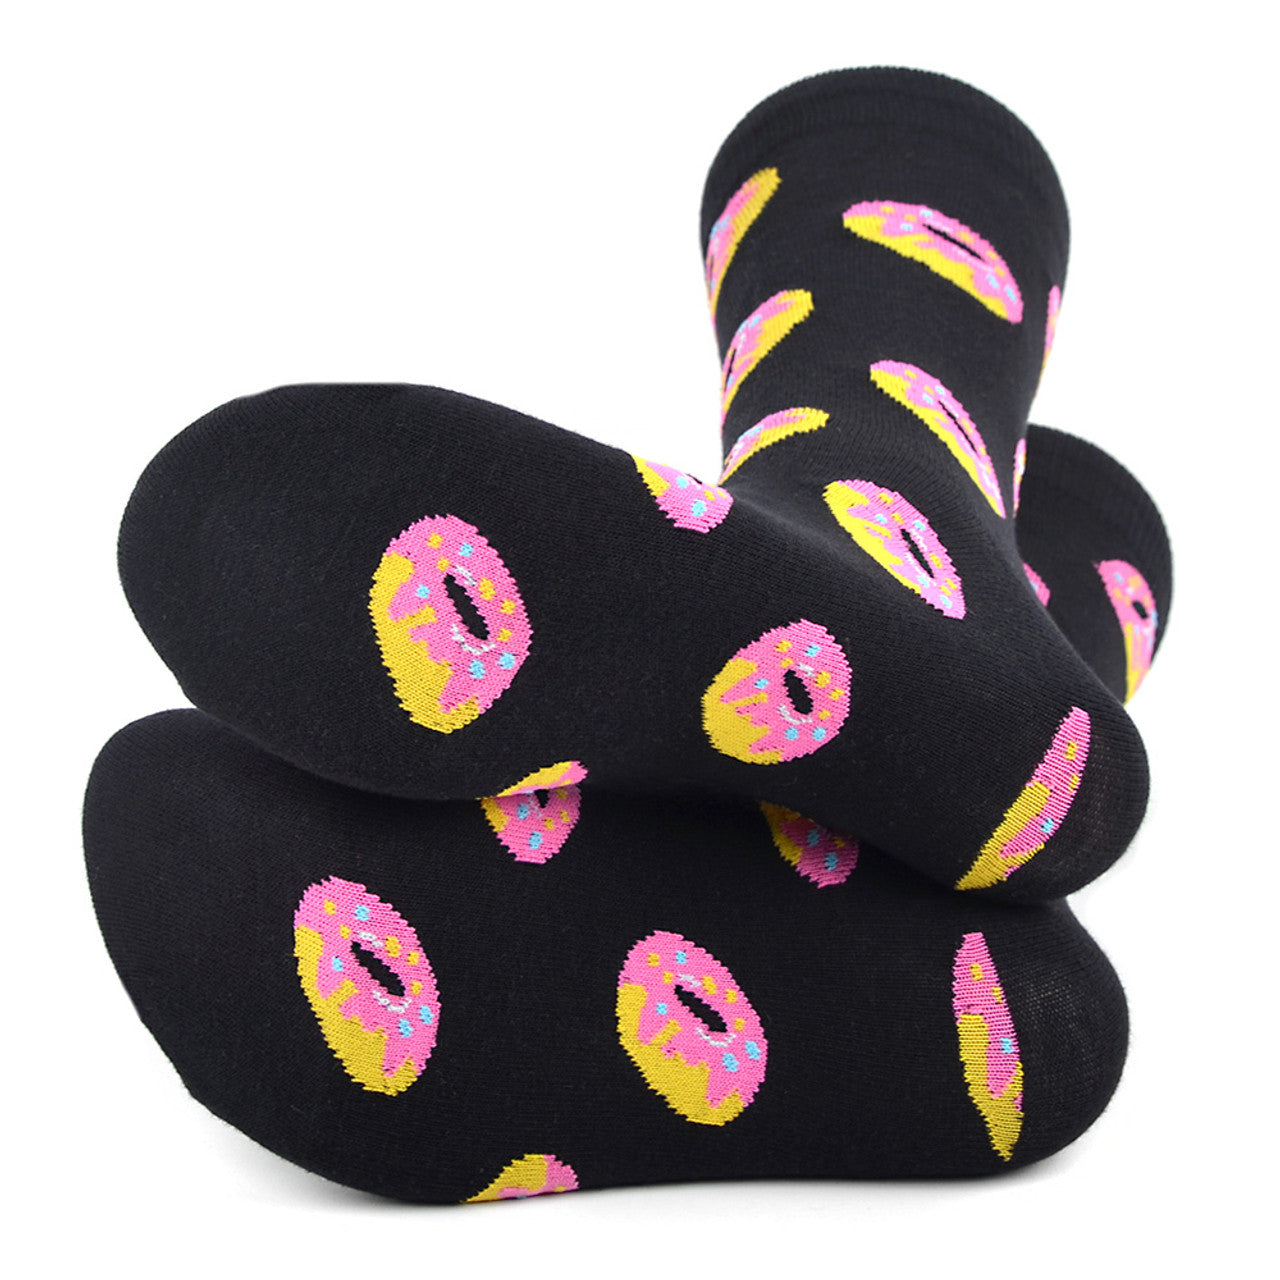 Men's Donut Crew Socks - Black and Pink